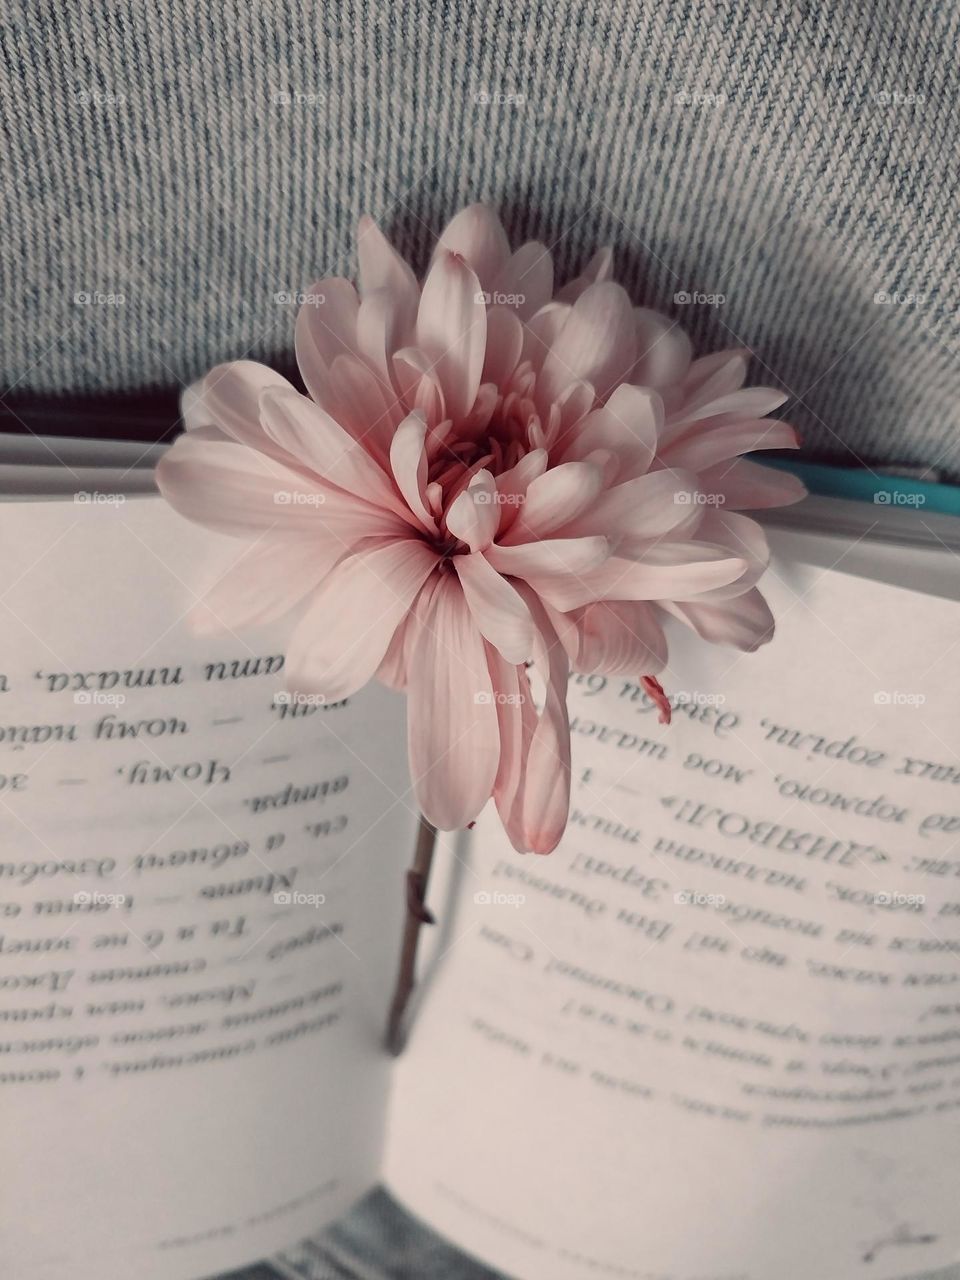 a flower and an open book